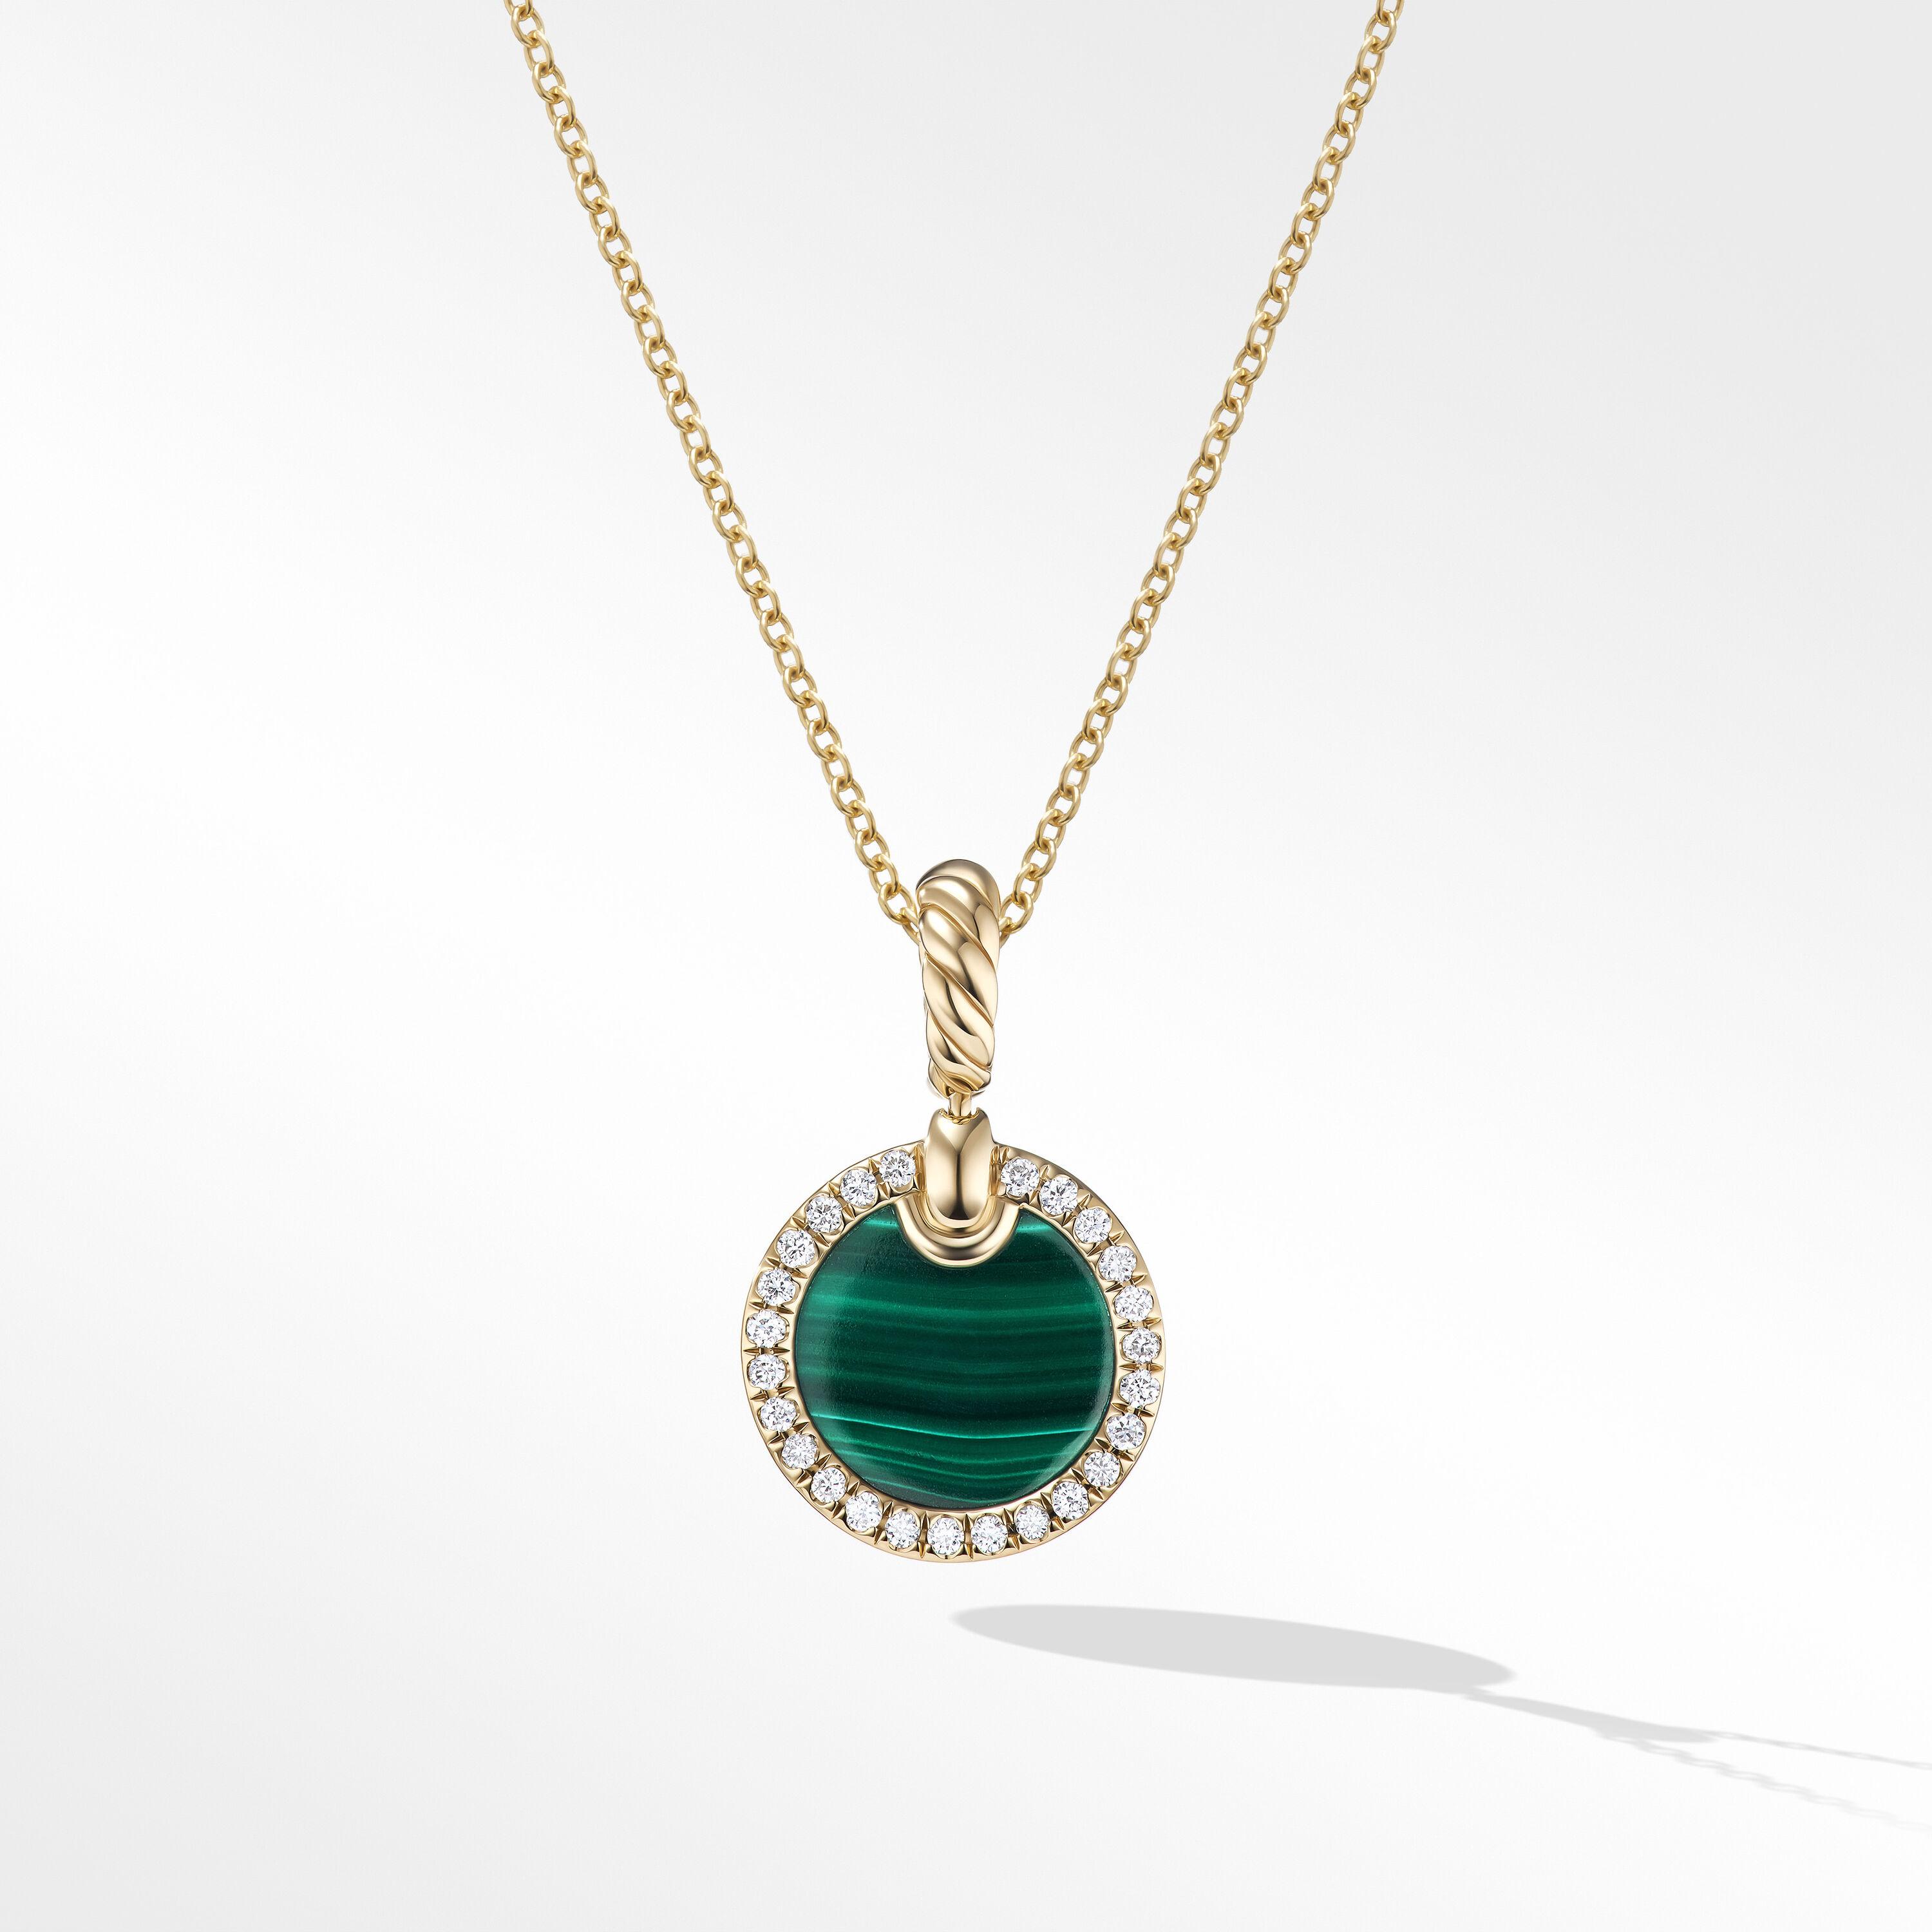 David Yurman Petite DY Elements Pendant Necklace with Malachite and Pave Diamonds